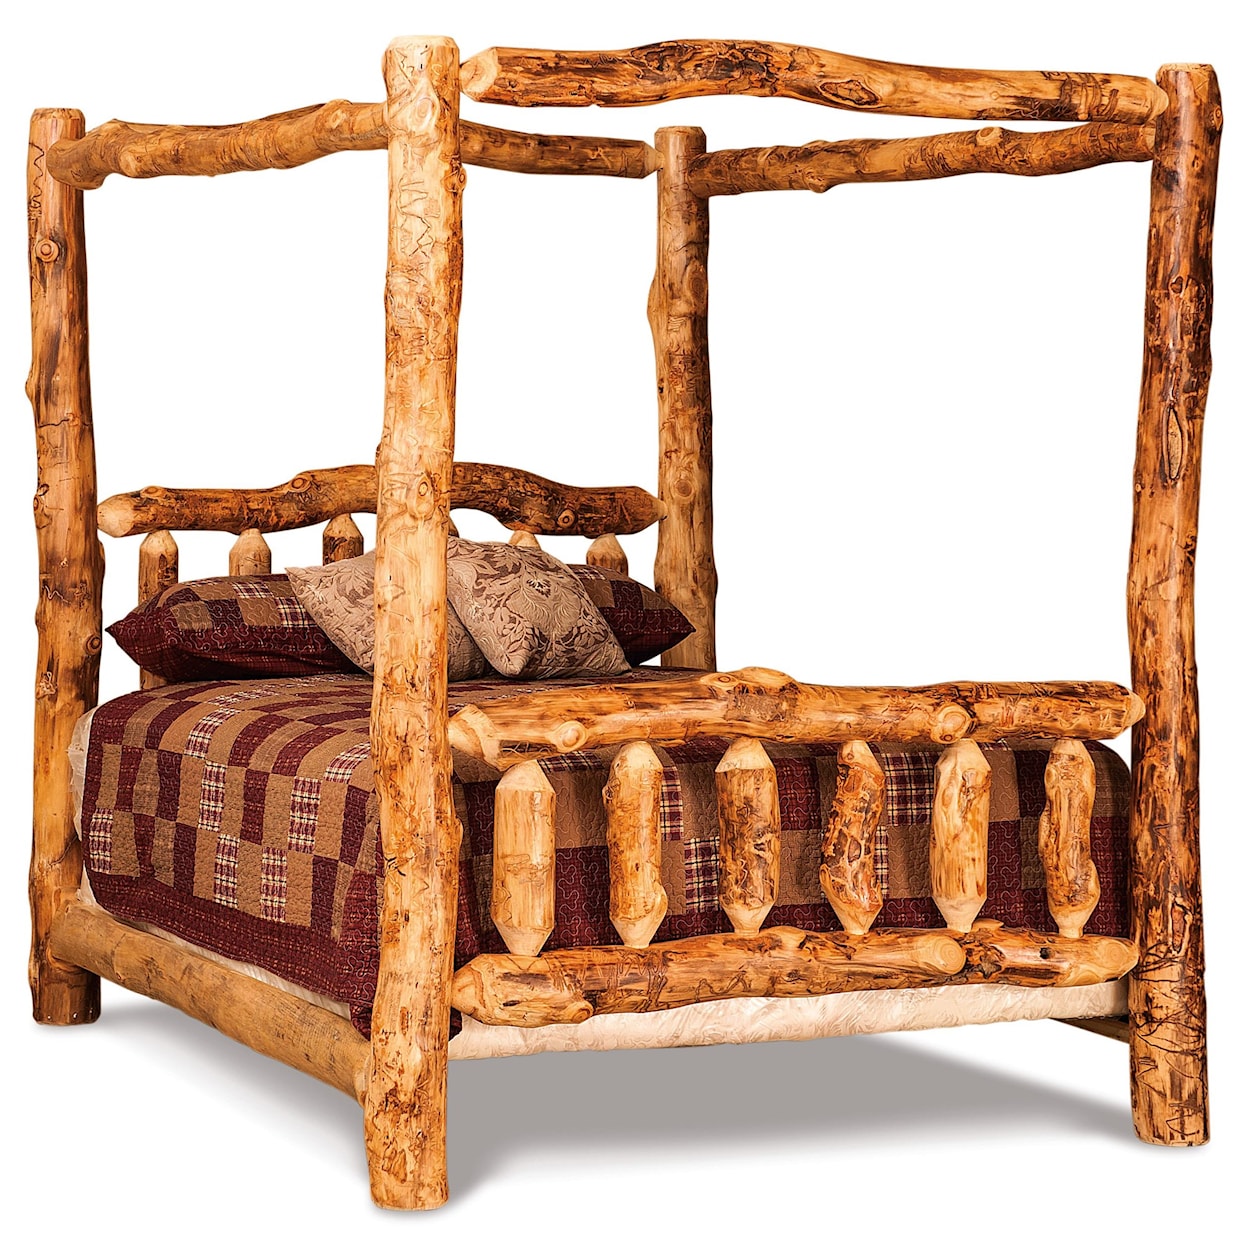 Fireside Log Furniture Log Bedroom Queen Canopy Bed